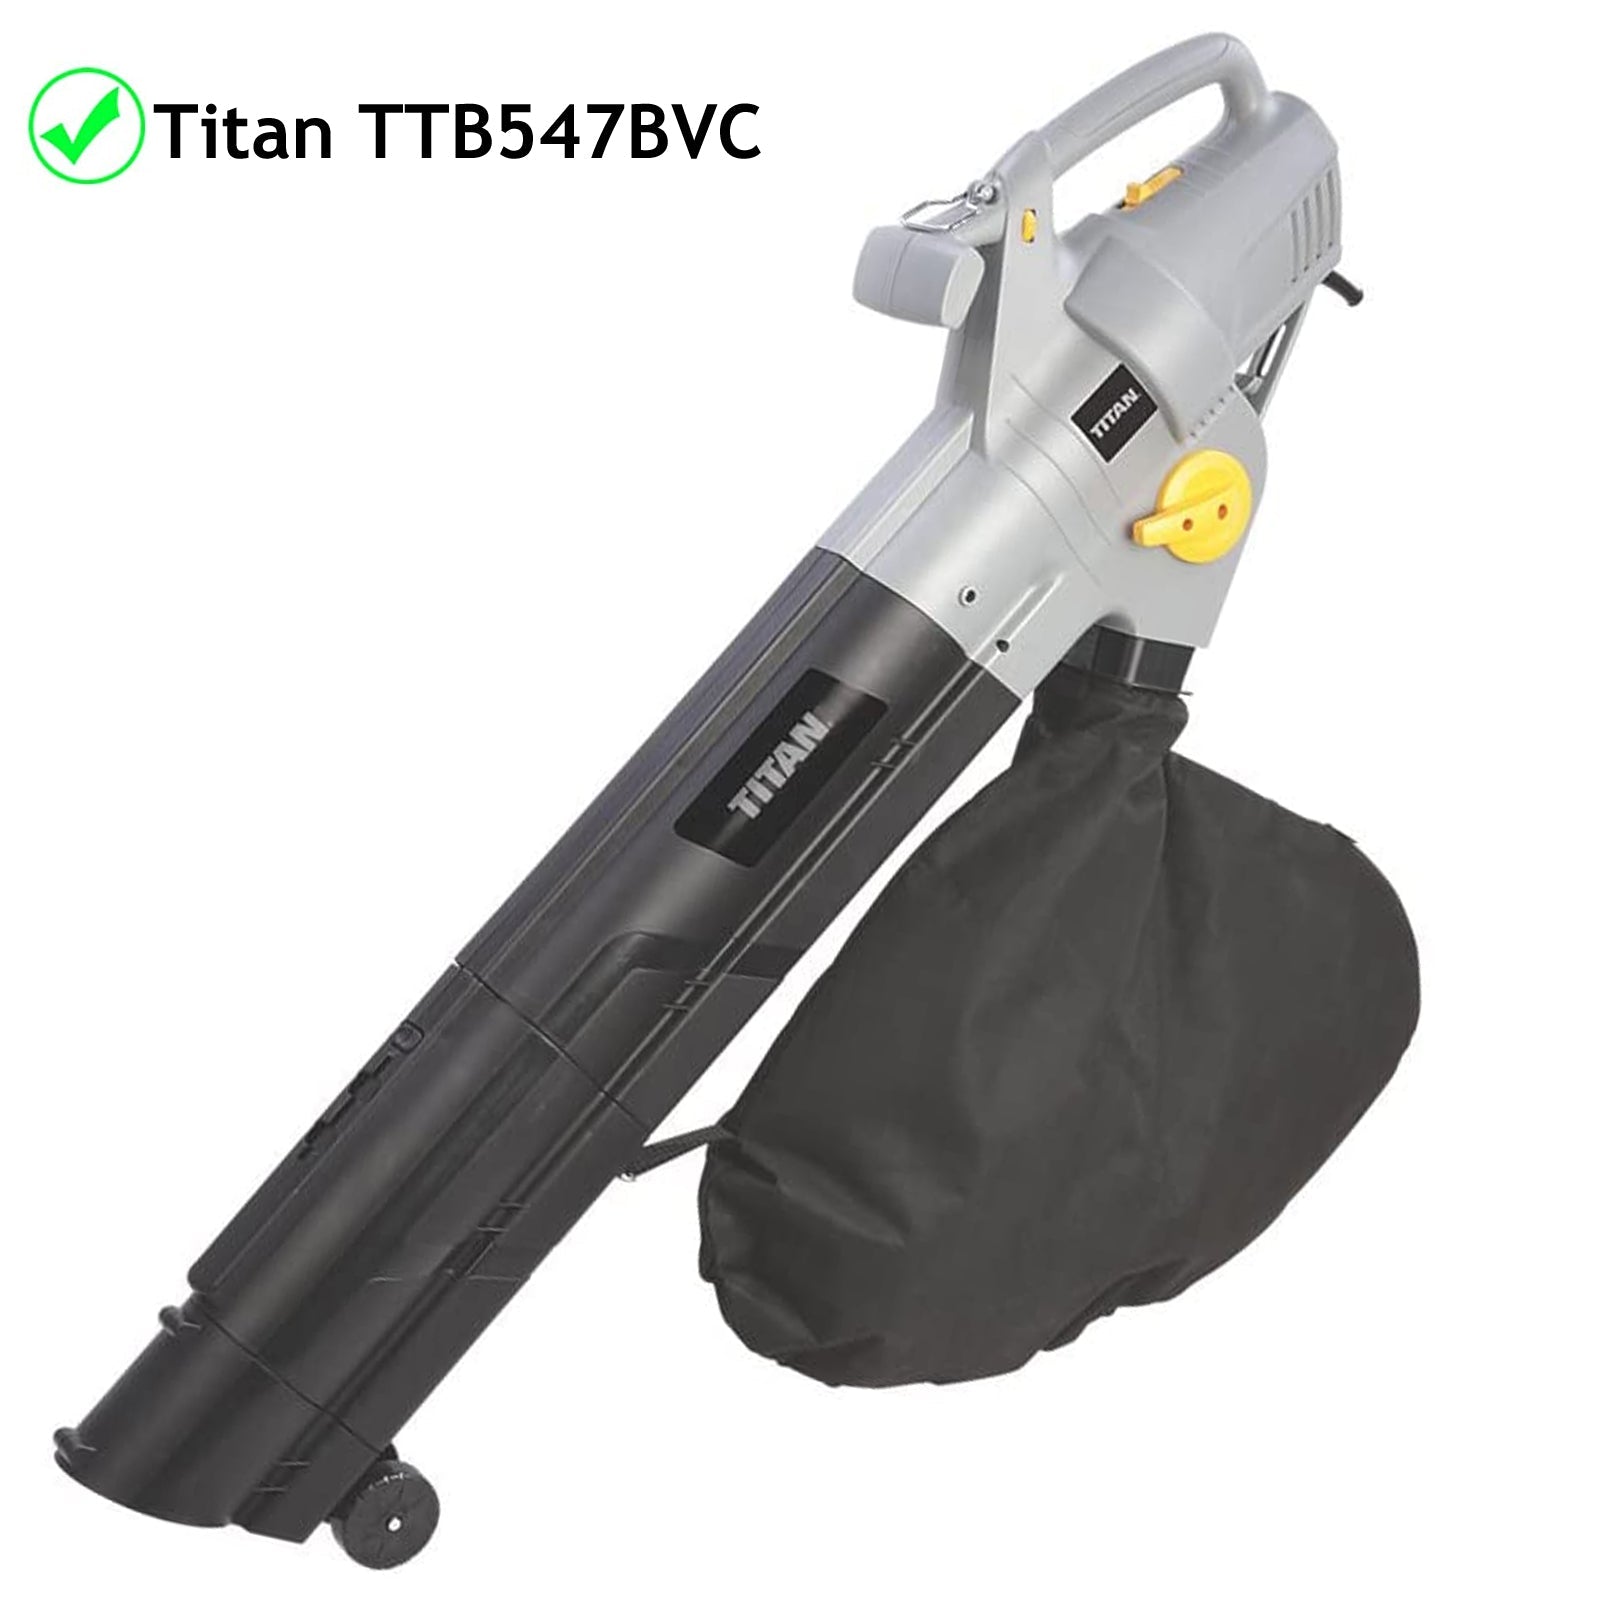 Debris Collection Bag Sack for TITAN TTB547BVC Garden Vac Leaf Blower Vacuum